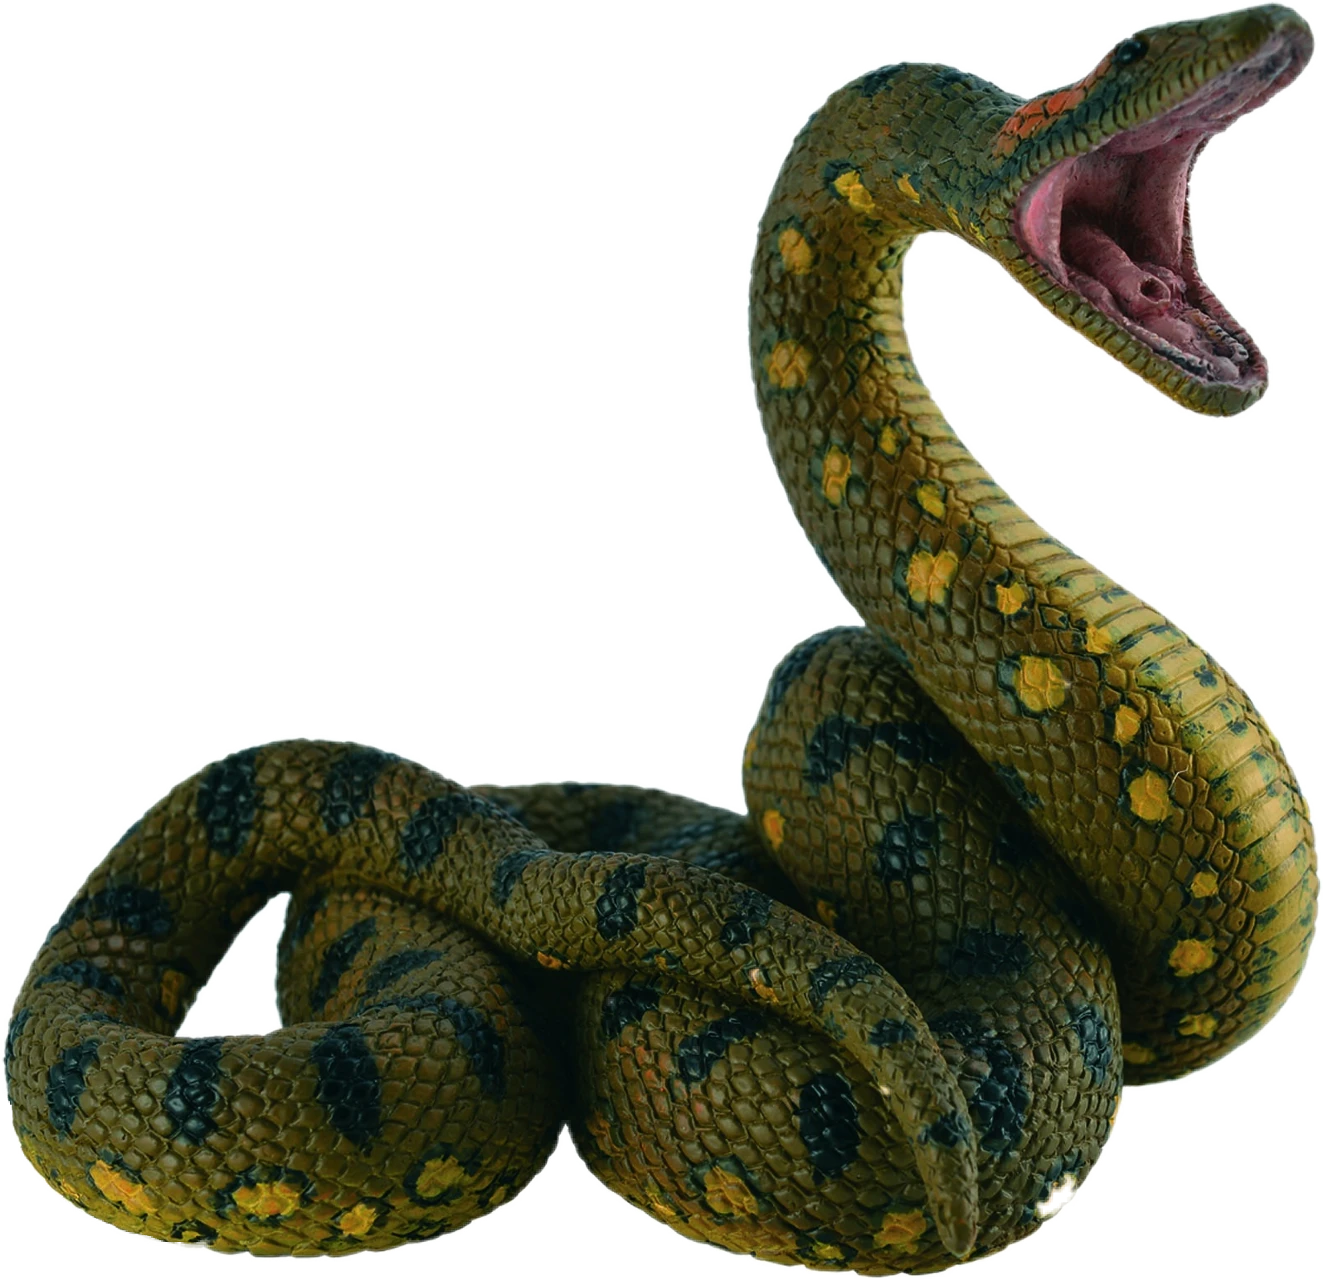 Green Anaconda Download Free Image PNG Image